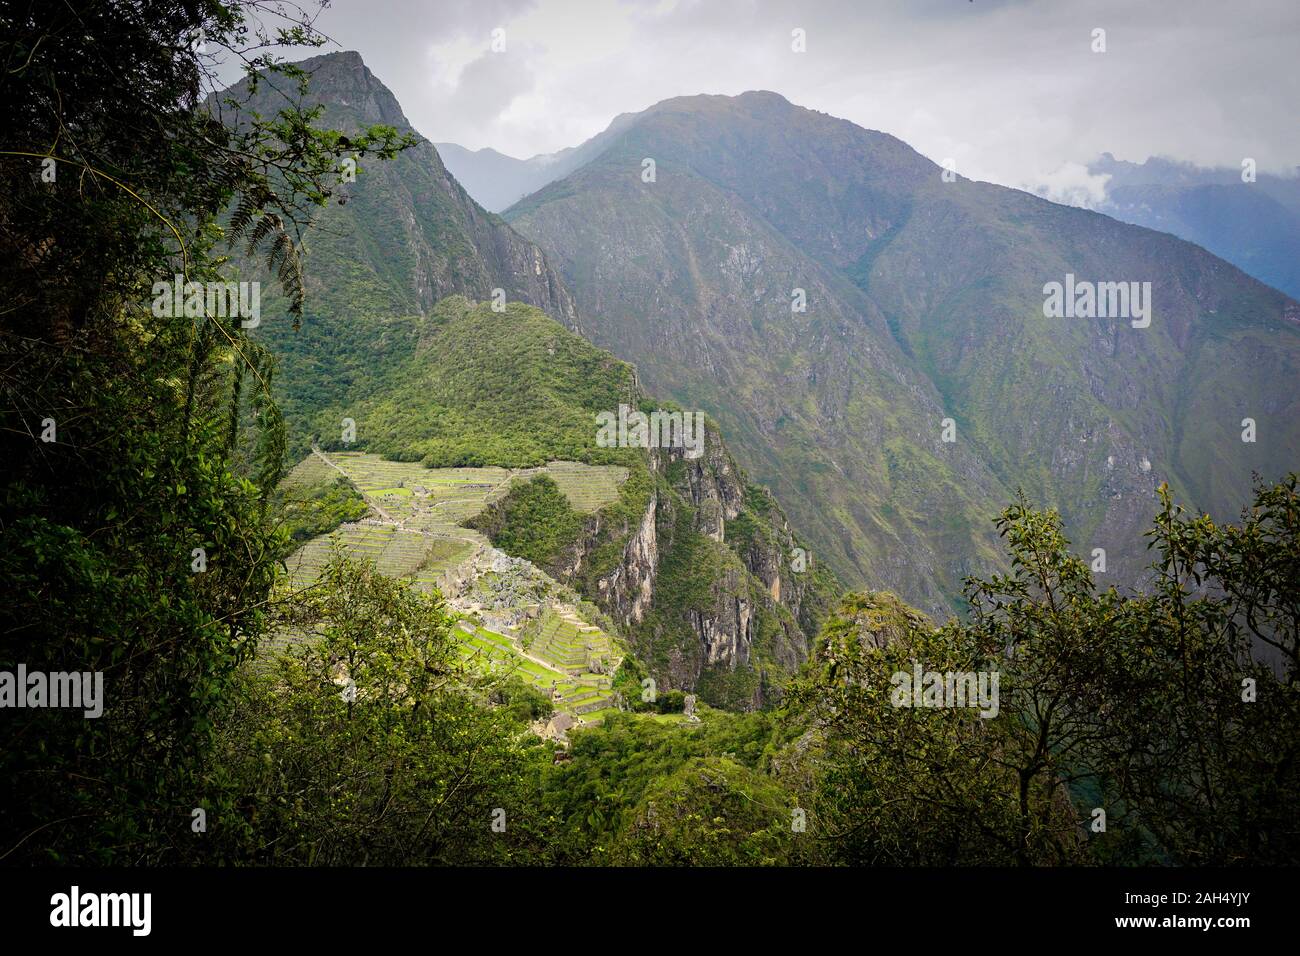 The best view of Machu Picchu from the Wayna Picchu Mountain, Huayna Picchu, Cusco Peru Stock Photo